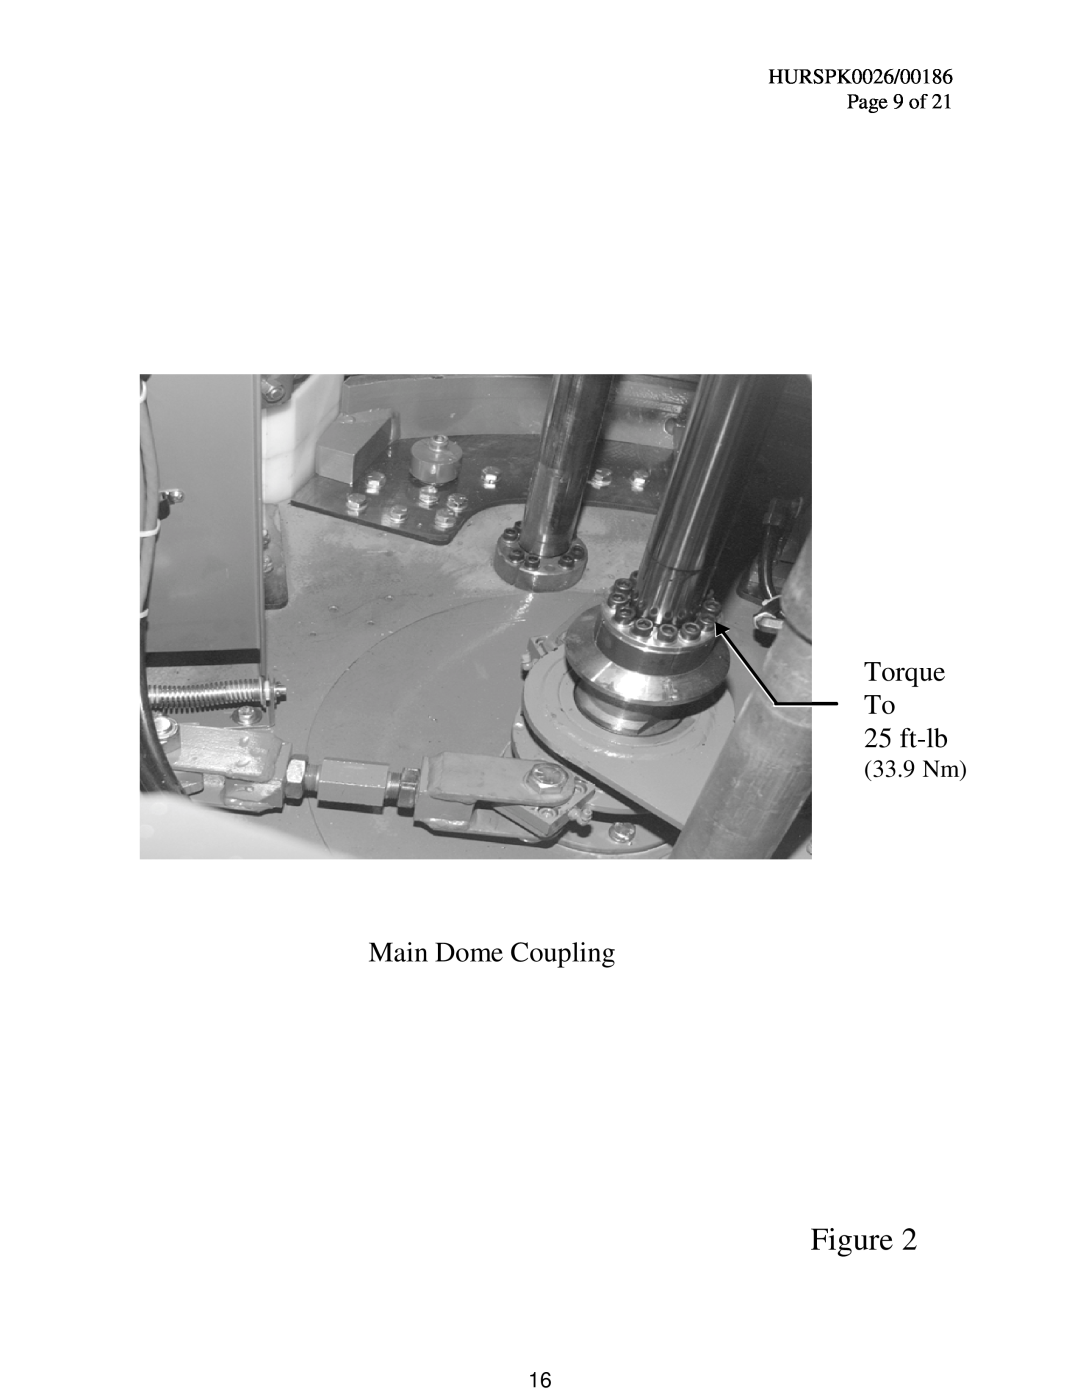 Milnor KURSPK0026, KURSPK0025 manual Torque To 25 ft-lb, Main Dome Coupling, 33.9 Nm 